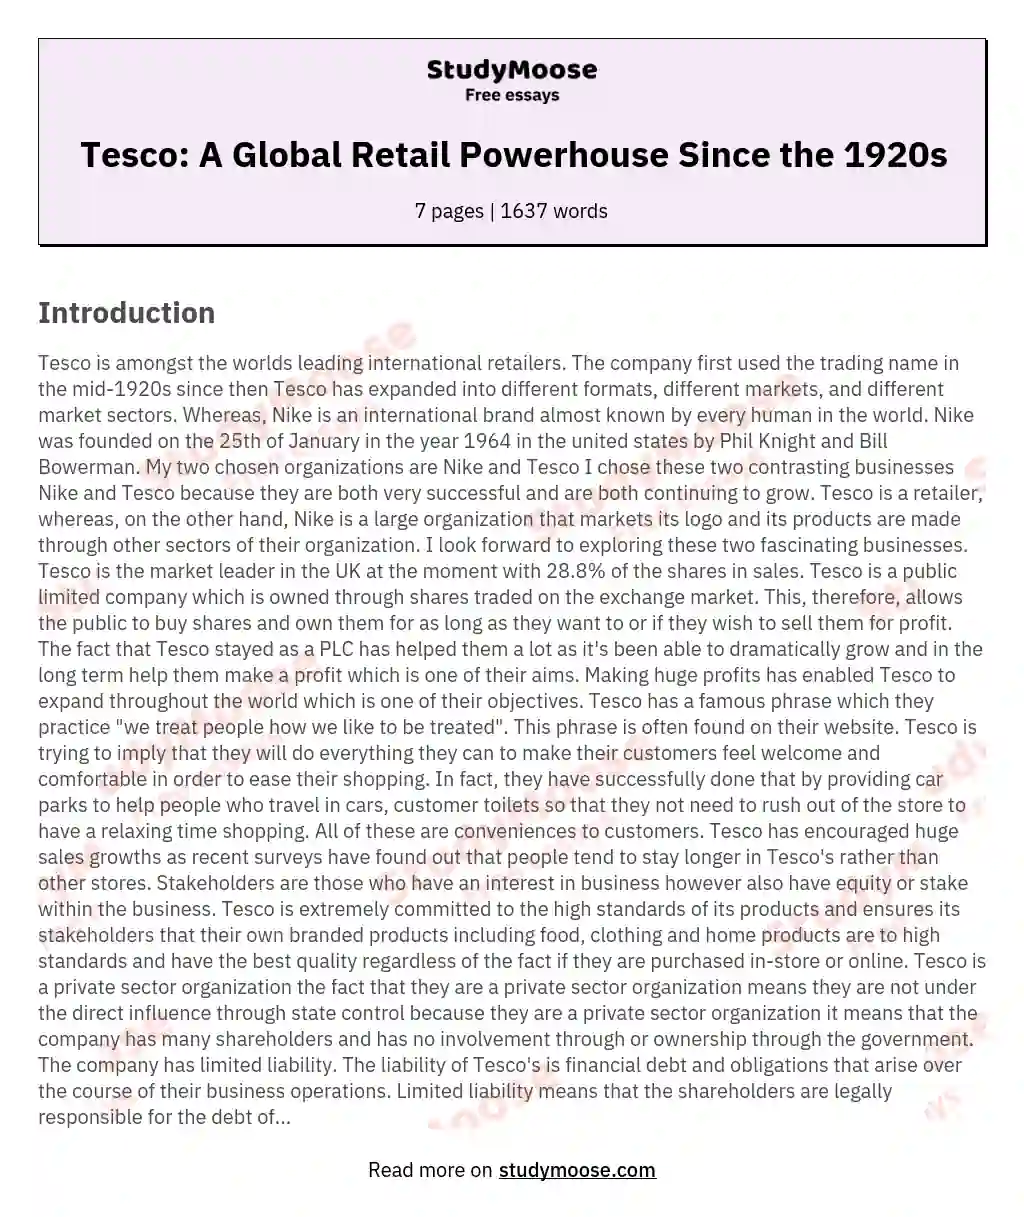 Tesco: A Global Retail Powerhouse Since the 1920s essay